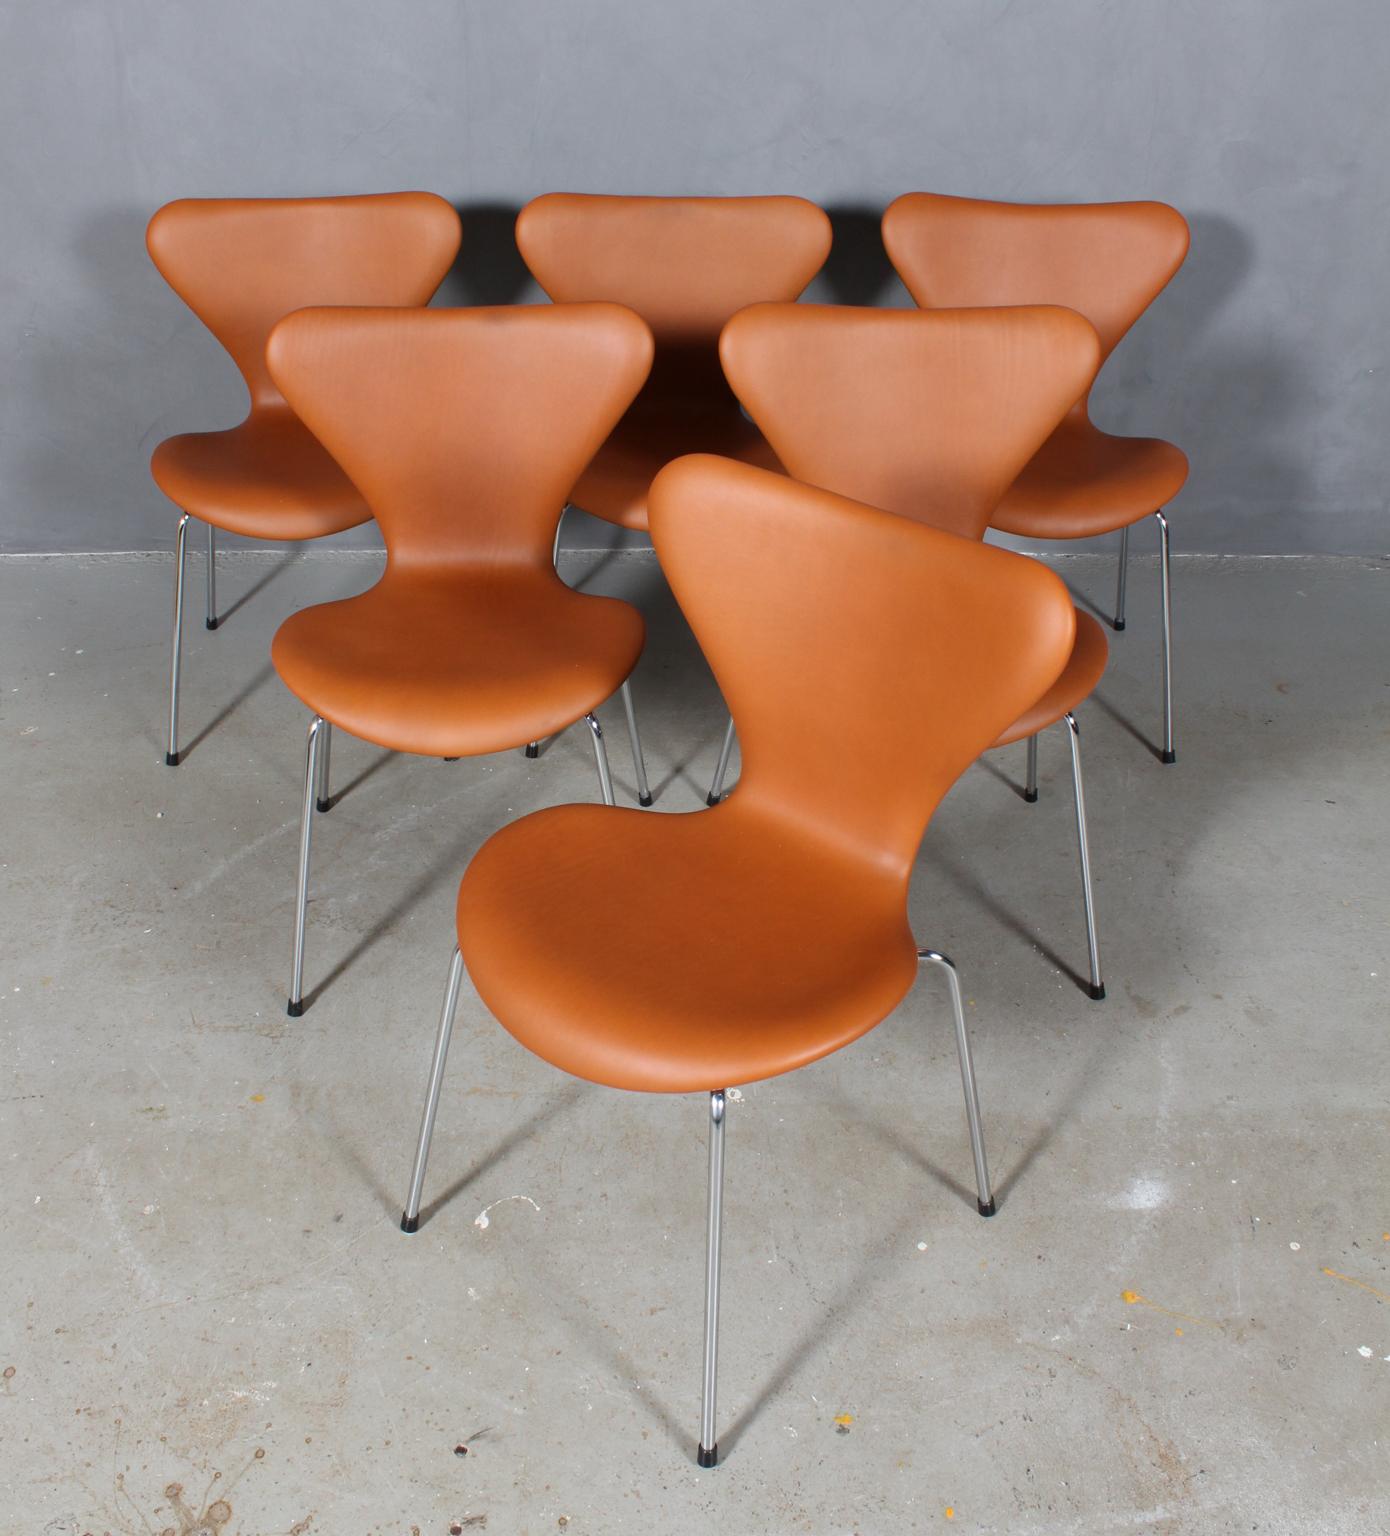 Arne Jacobsen dining chair new upholstered with walnut elegance aniline leather.

Base of chrome steel tube.

Model 3107 Syveren, made by Fritz Hansen.